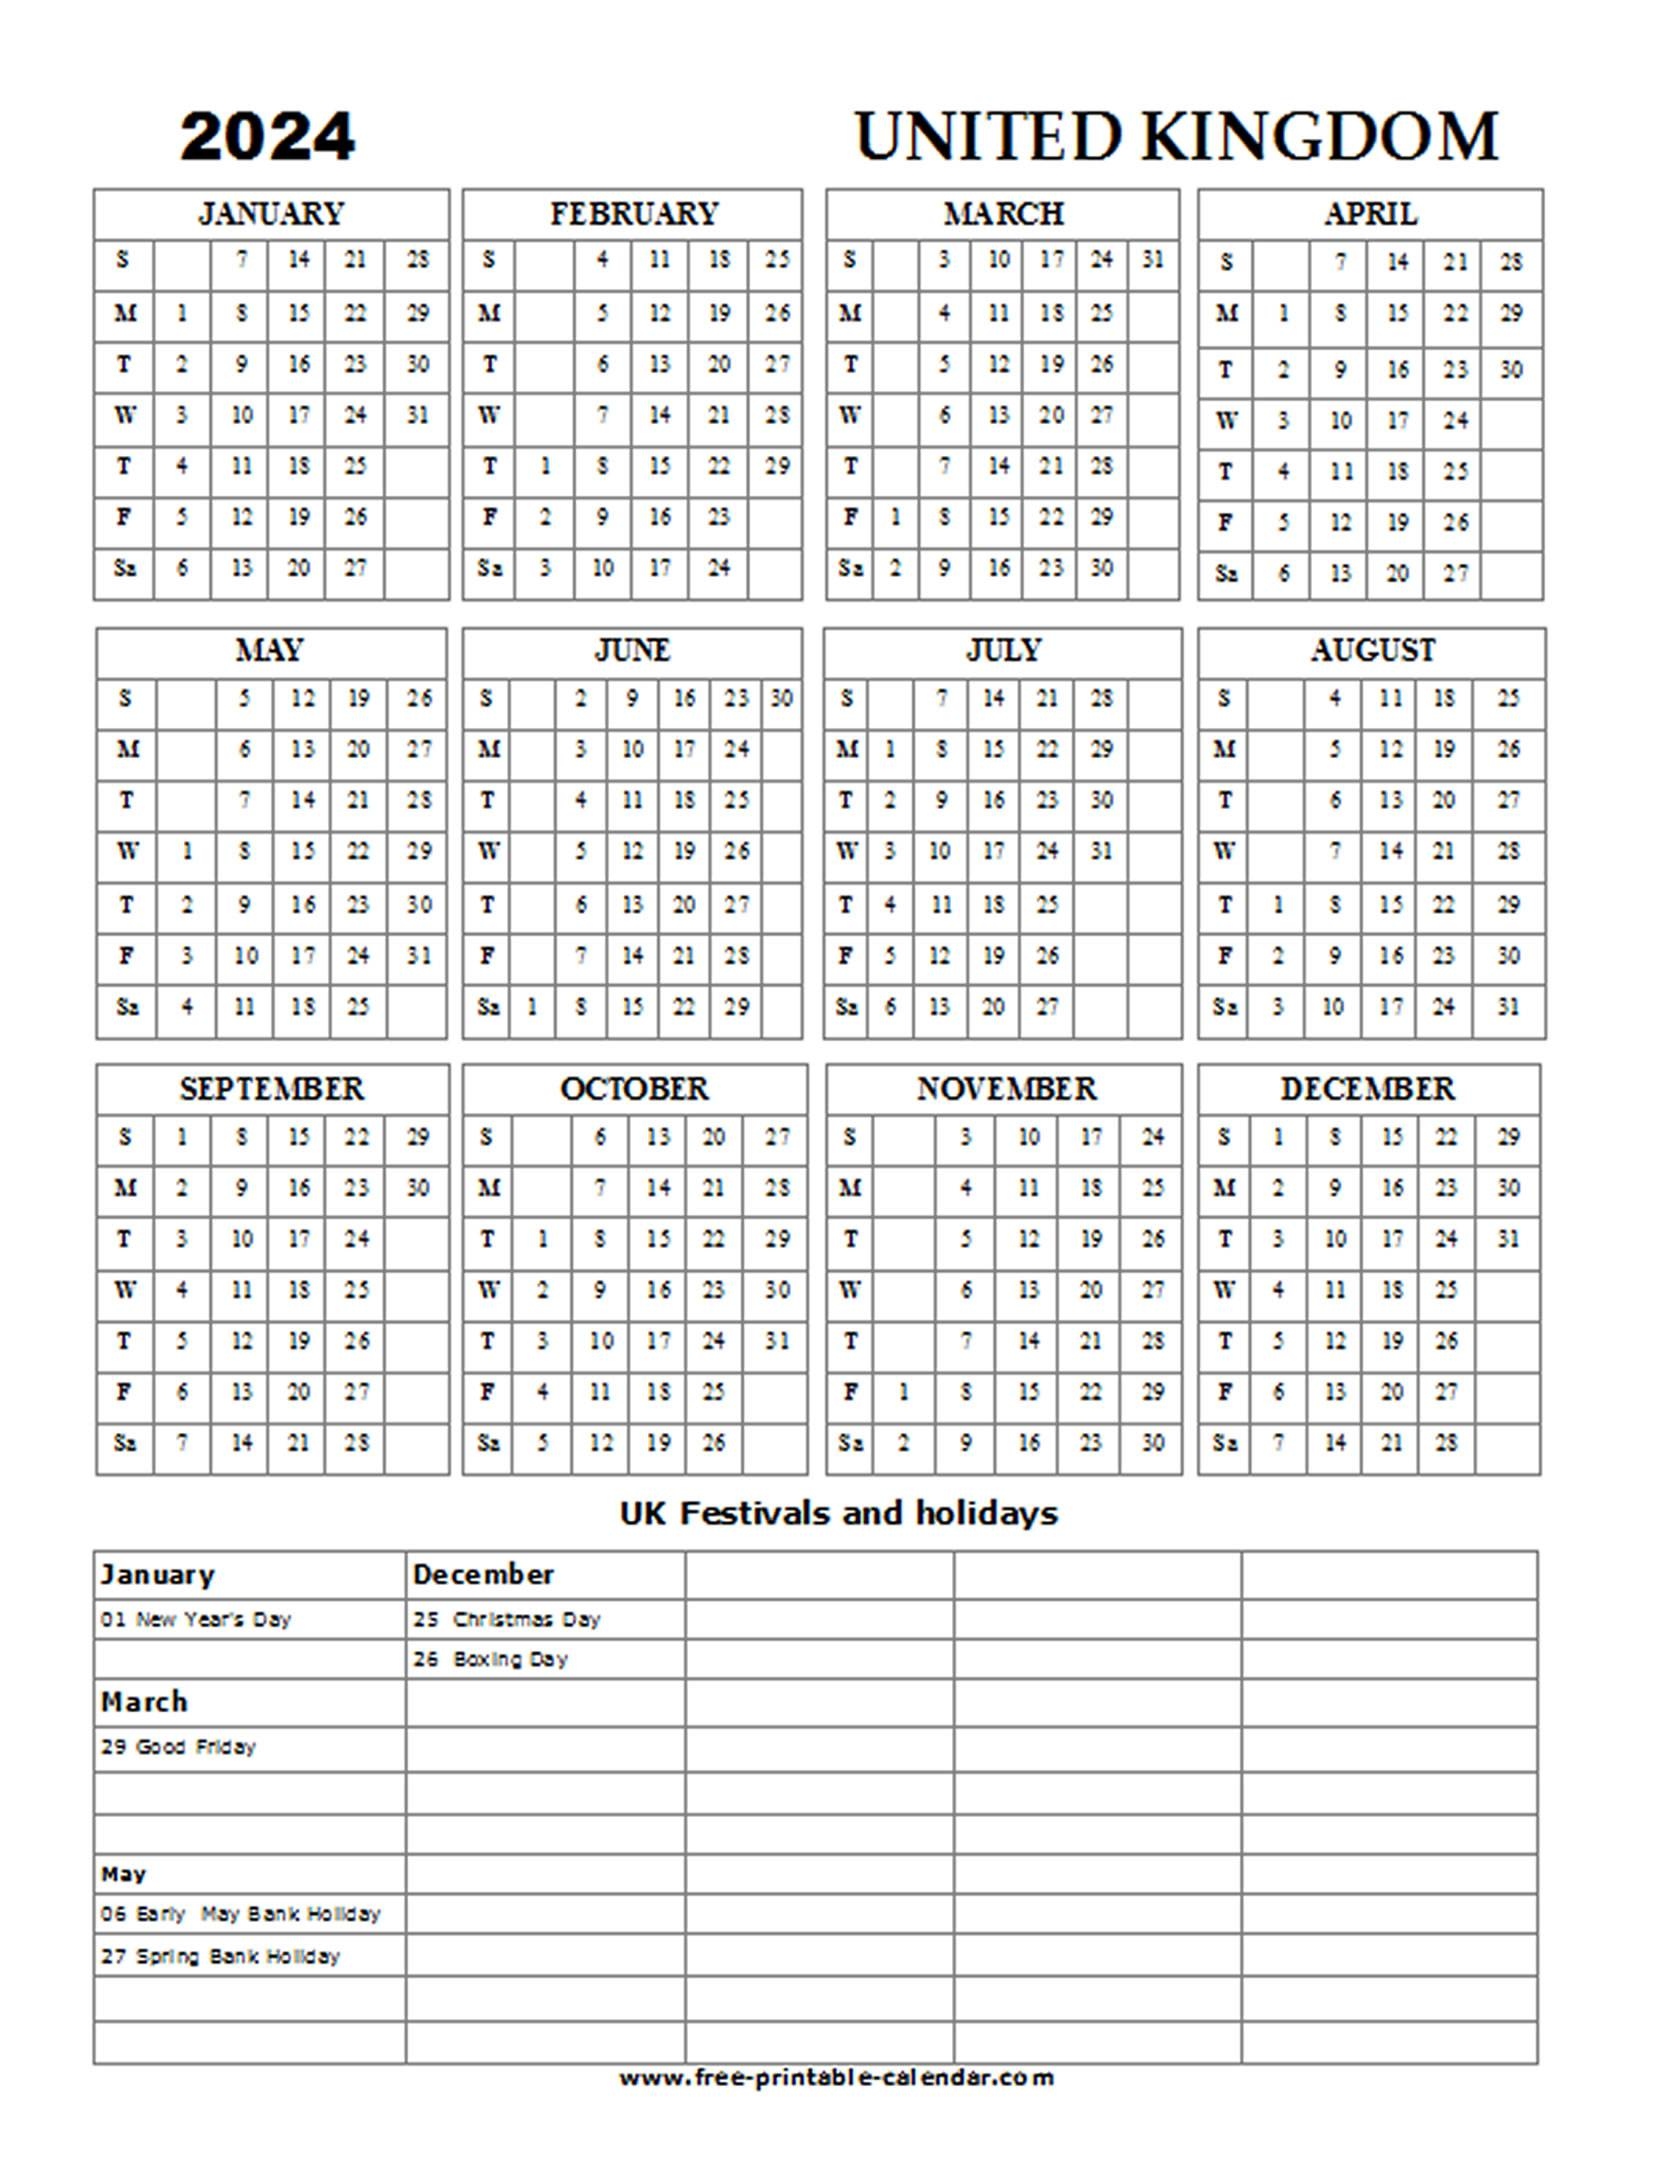 2024 Uk Holiday Calendar - Free-Printable-Calendar with regard to Free Printable Calendar 2024 Uk With Bank Holidays